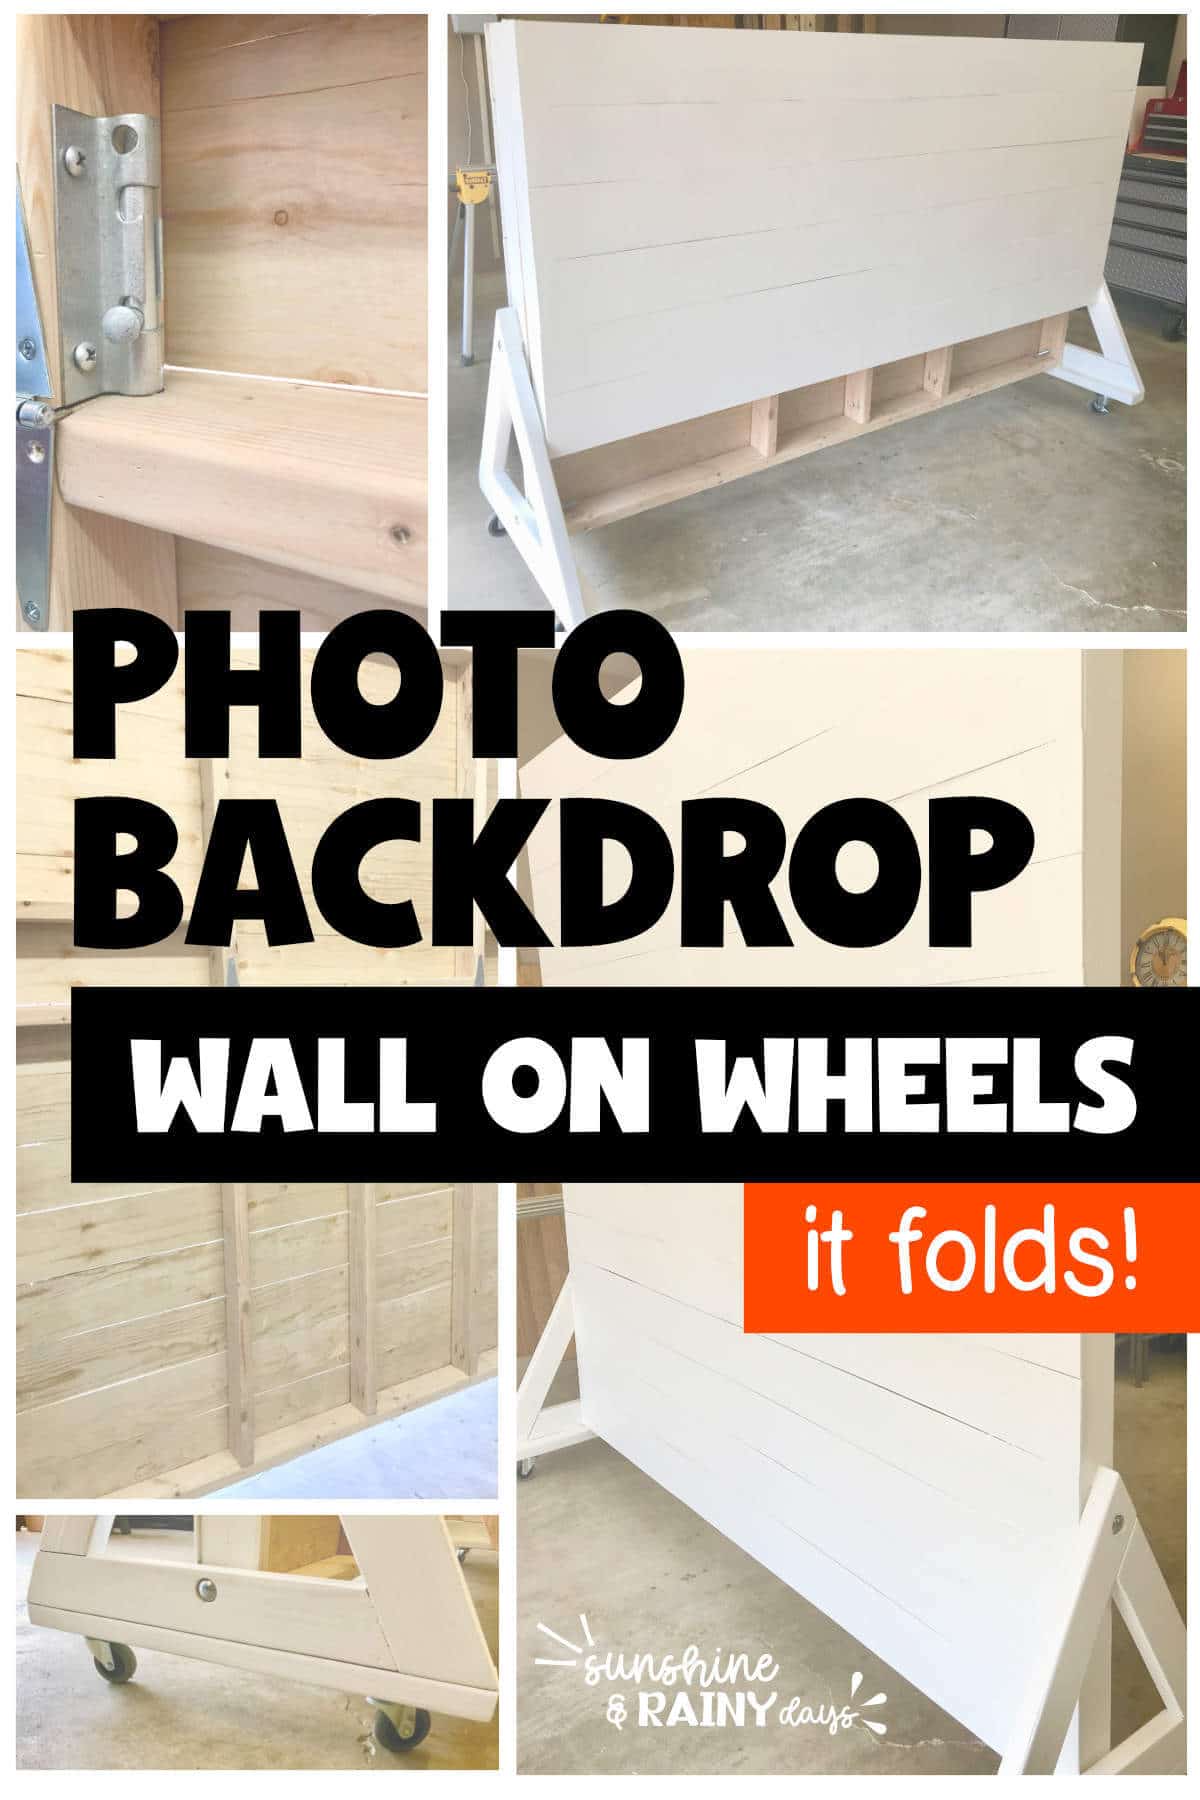 Photo backdrop wall on wheels that folds.